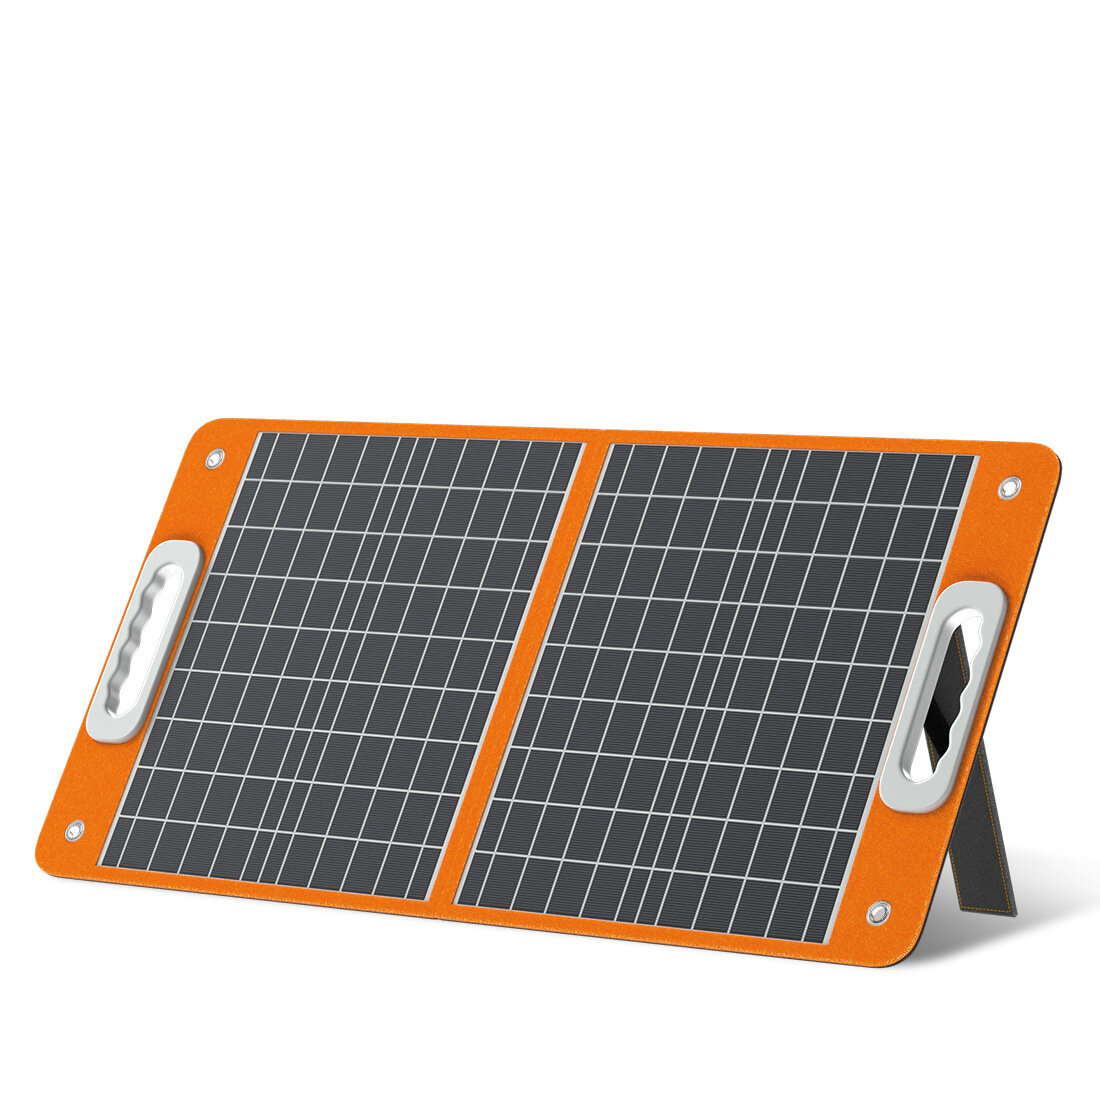 [PT] Painel solar dobrável FlashFish 18V 60W carregador solar portátil com saída DC USB-C QC3.0 para telefones tablets camping Van RV Trip